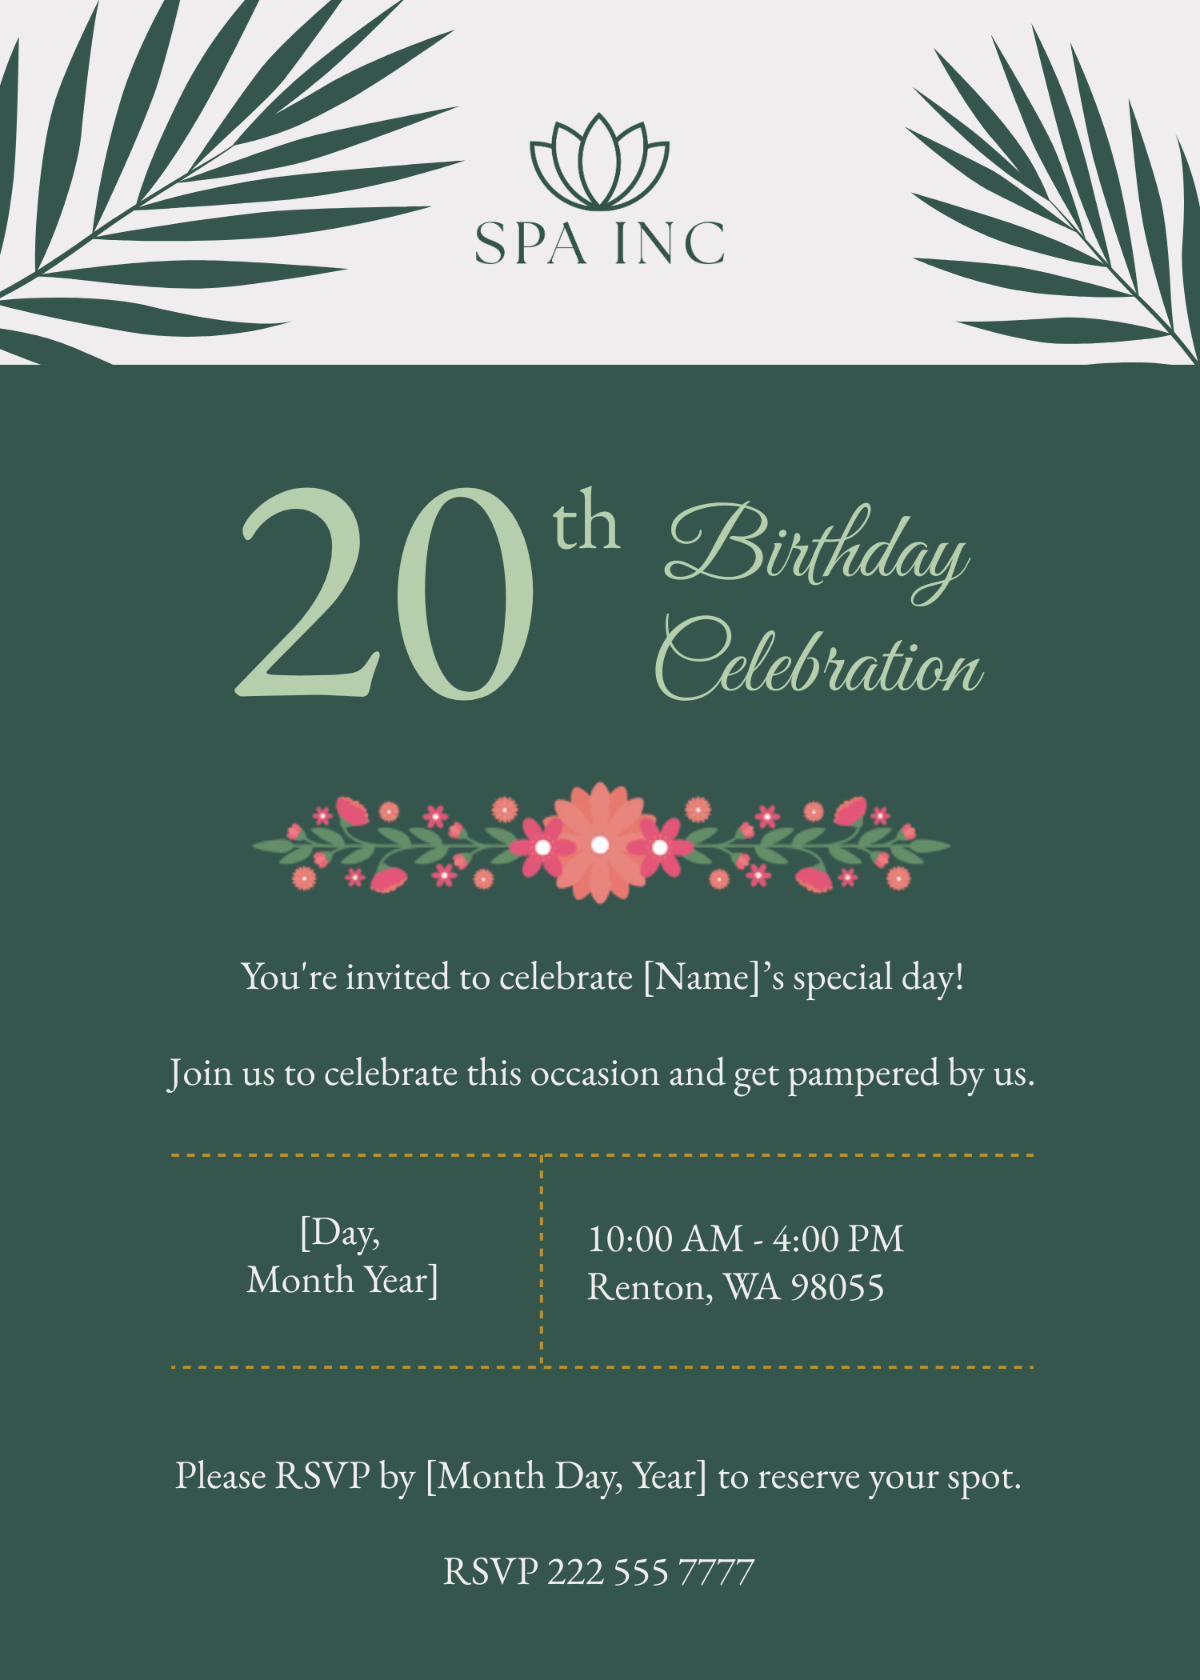 Spa Birthday Invitation